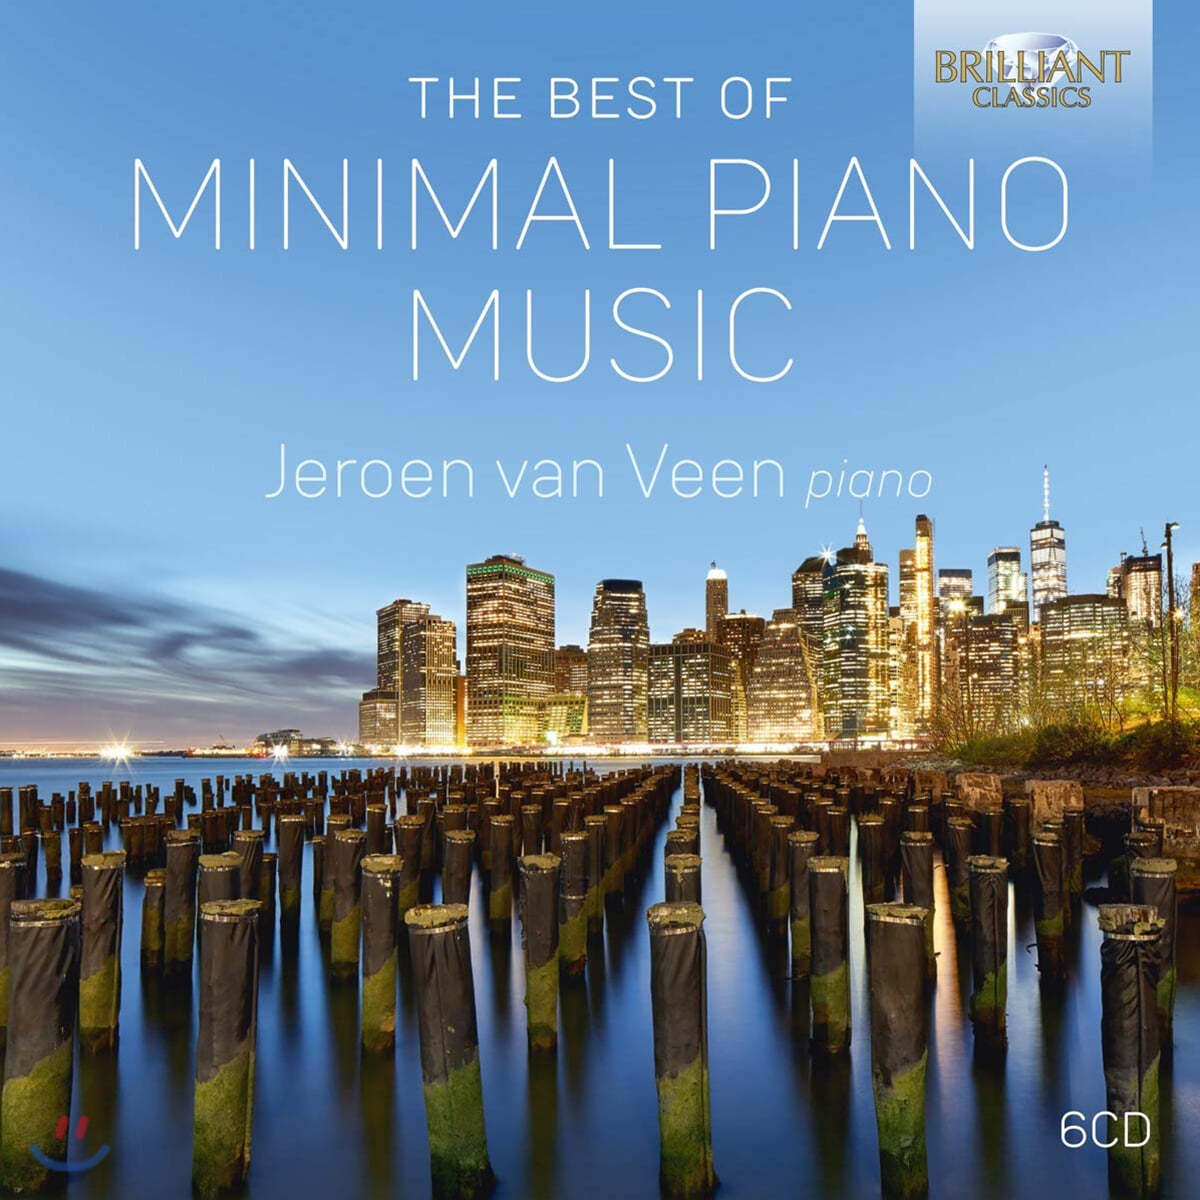 Jeroen van Veen 미니멀리즘 피아노 음악 베스트 모음집 (Best of Minimal Piano Music) 